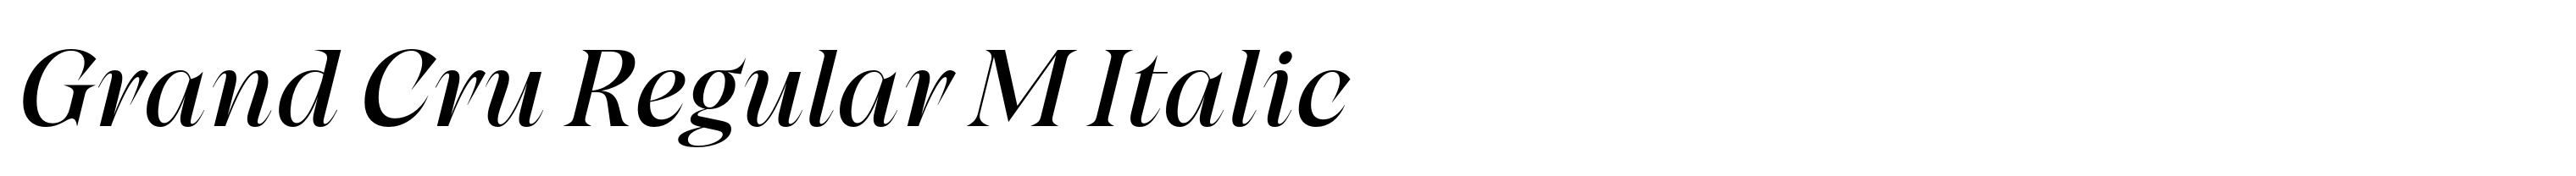 Grand Cru Regular M Italic